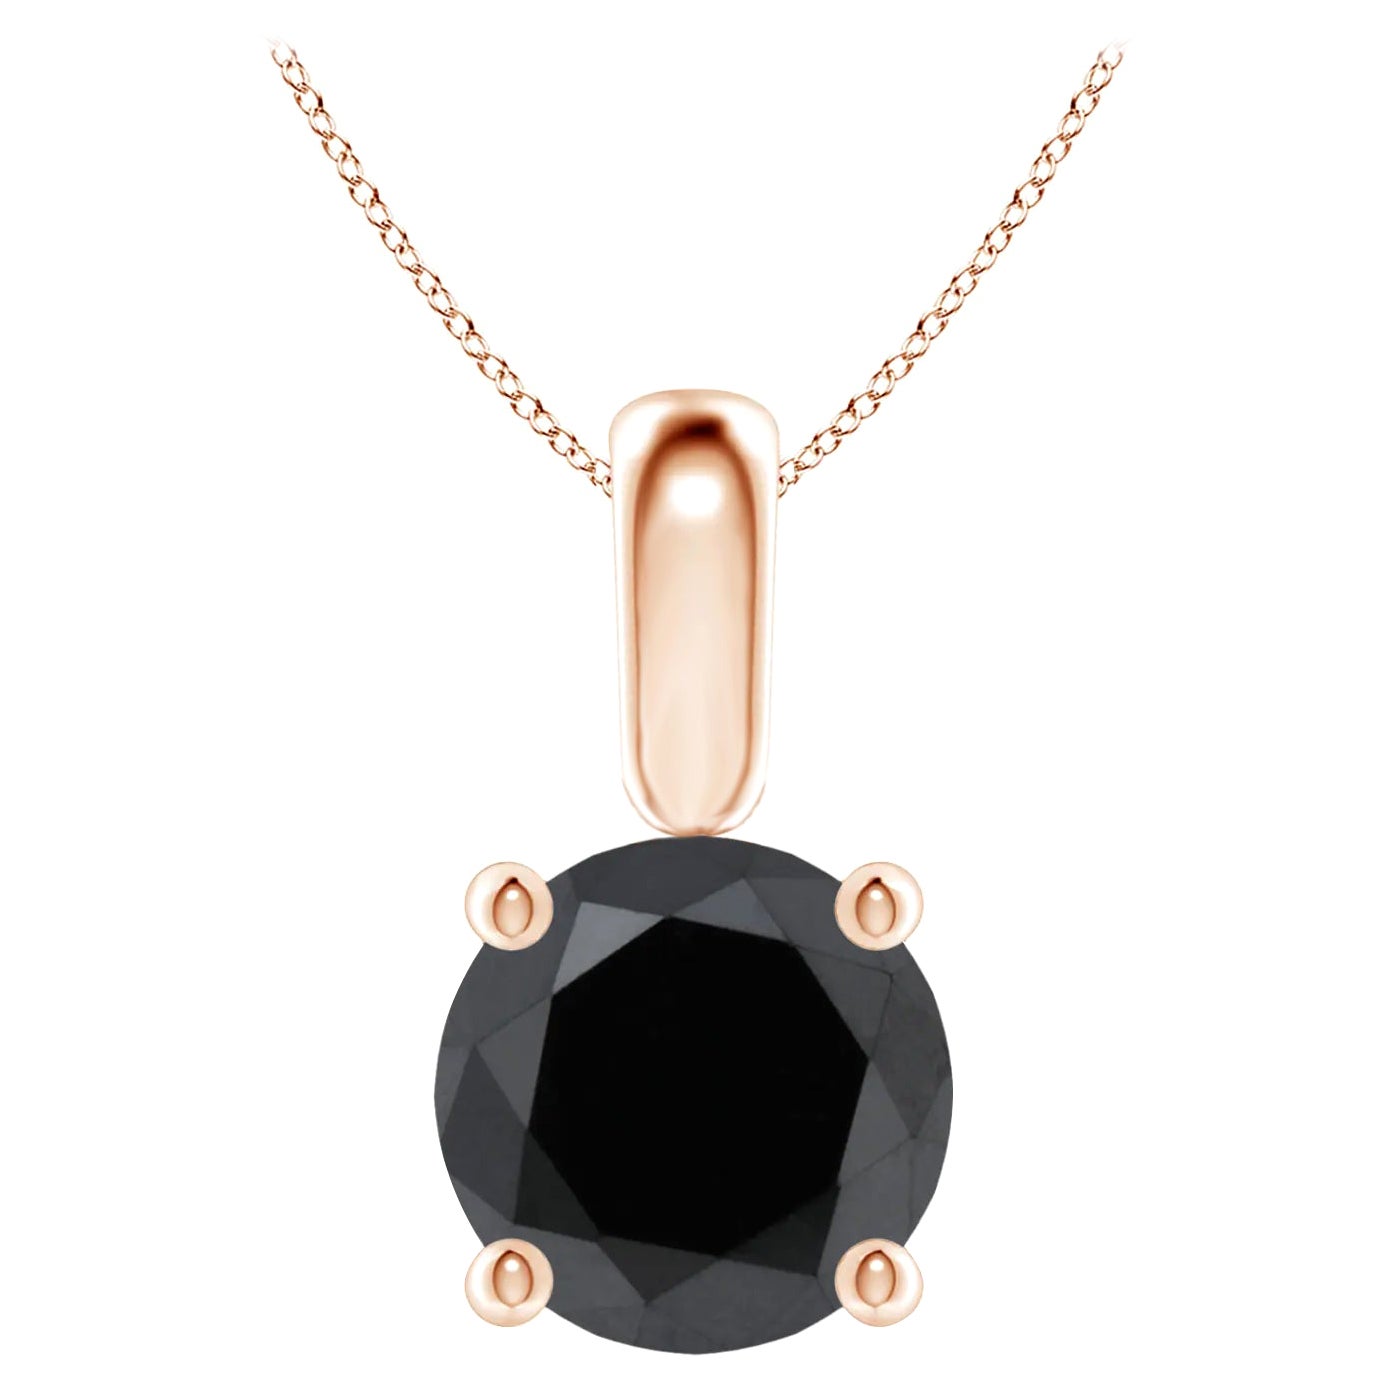 3.13 Carat Round Black Diamond Solitaire Pendant Necklace in 14K Rose Gold